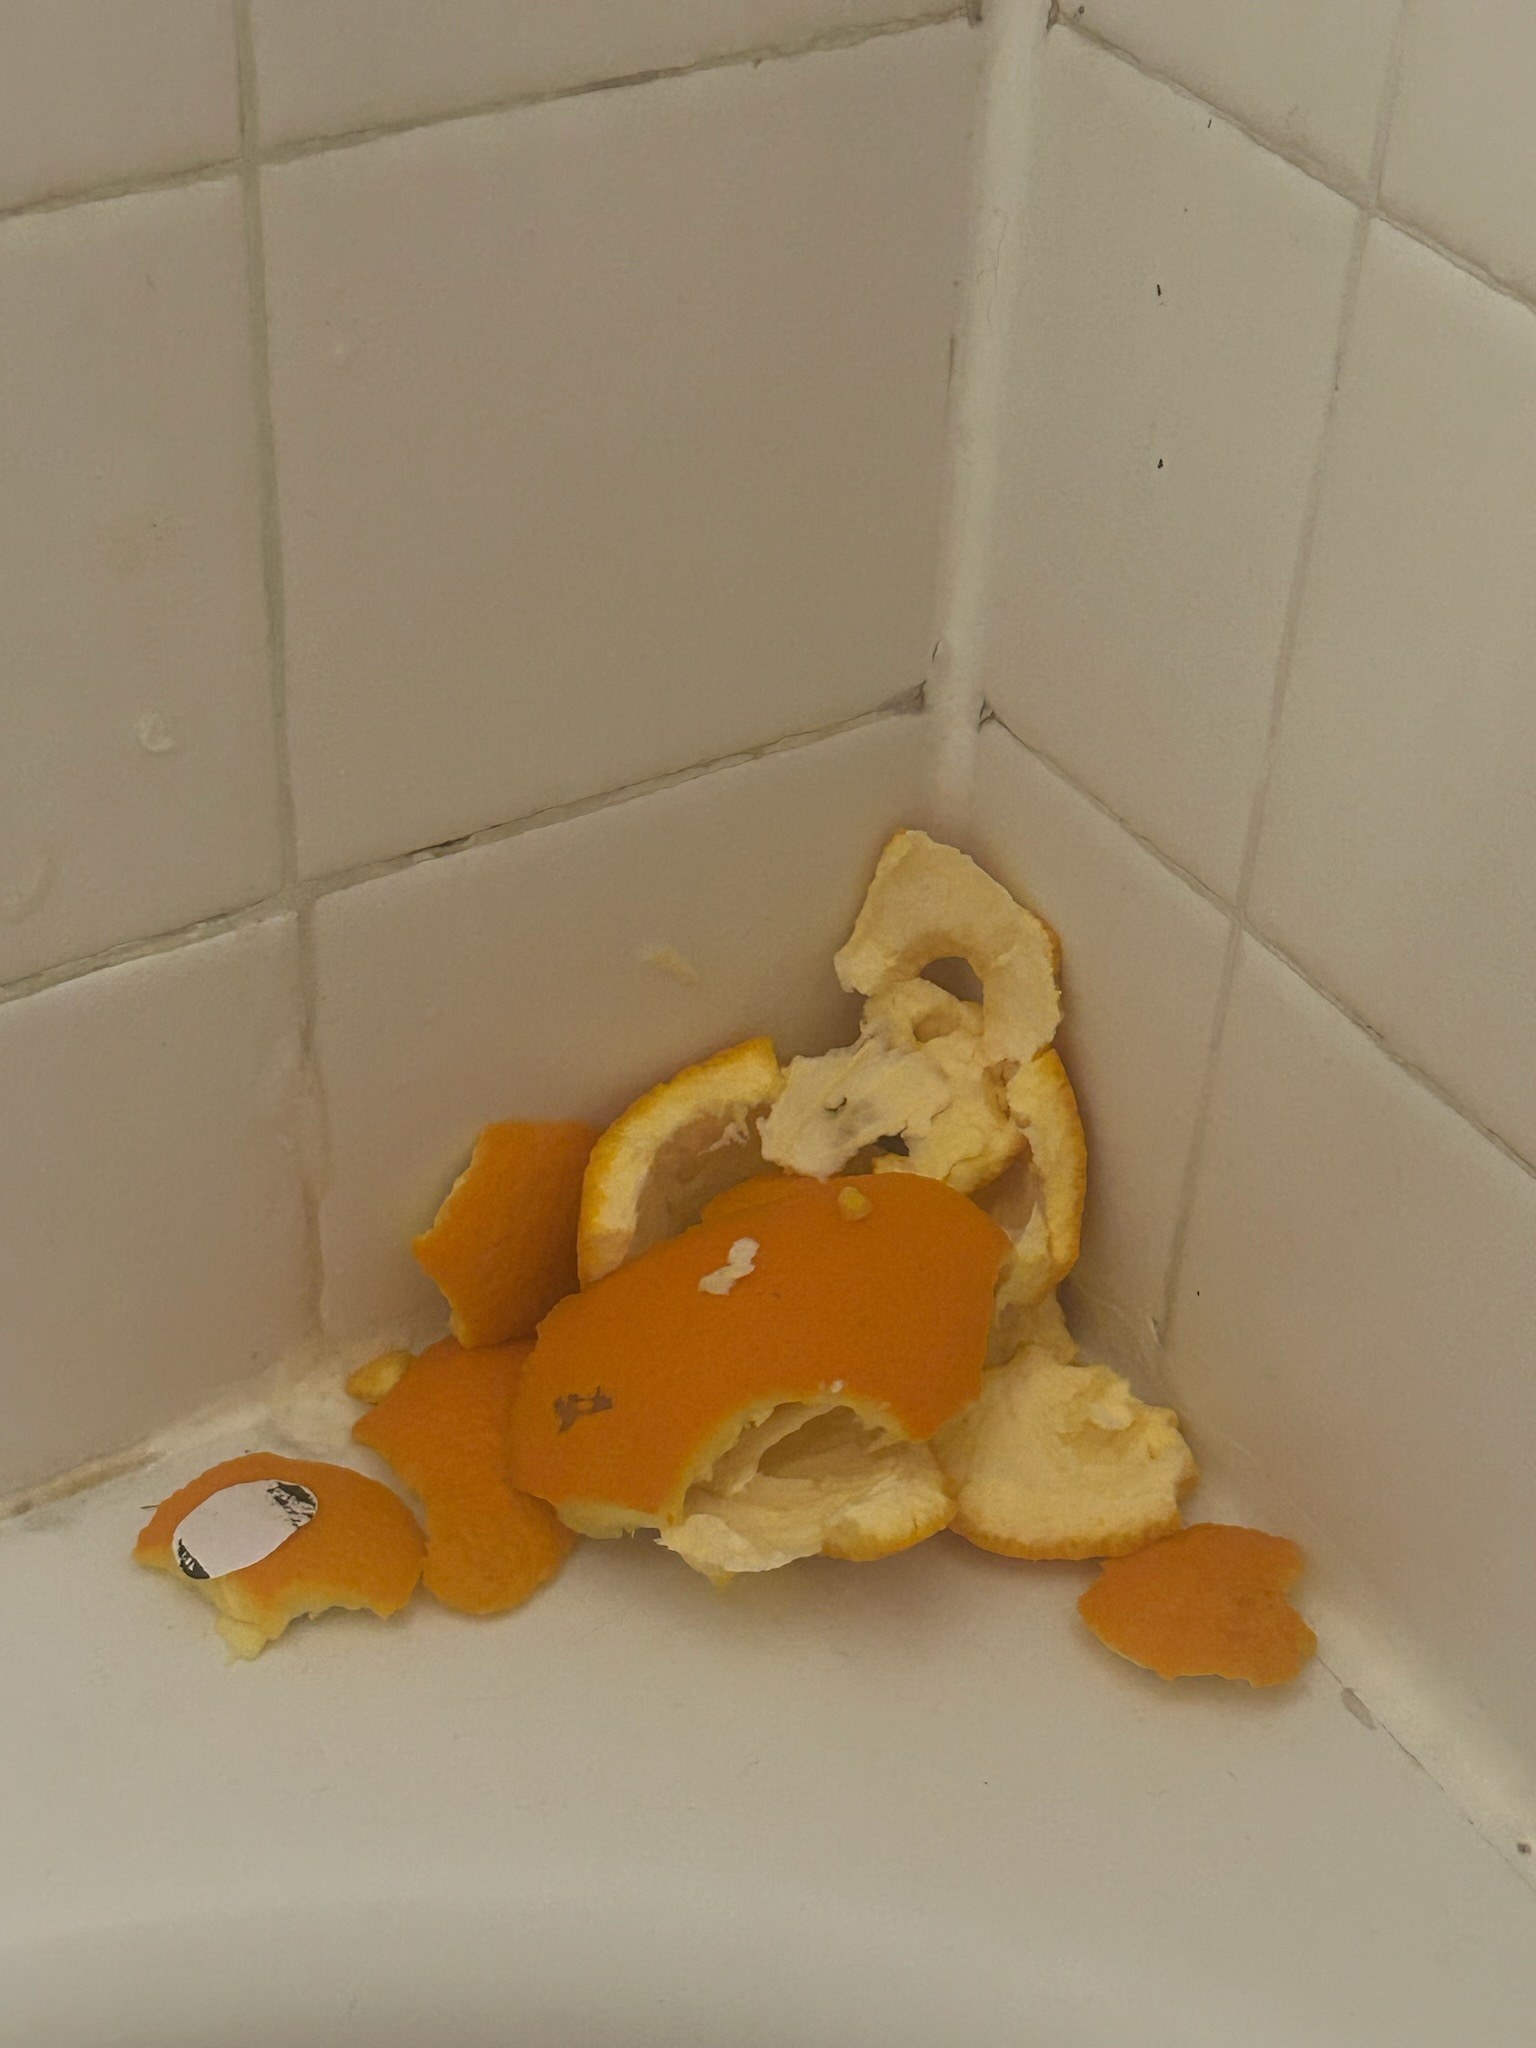 The orange peels in the corner